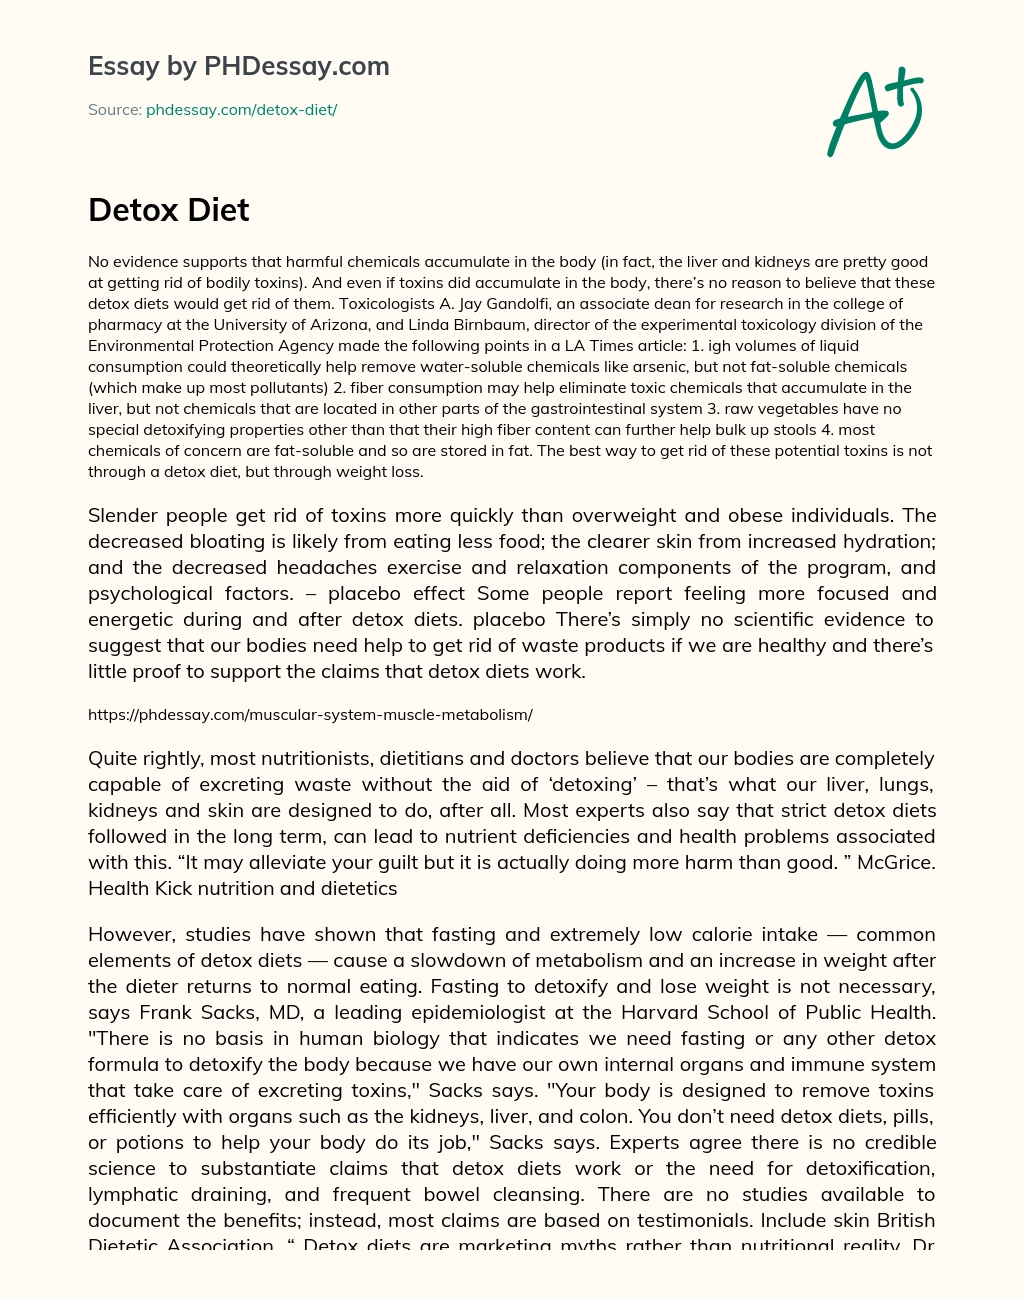 Detox Diet essay